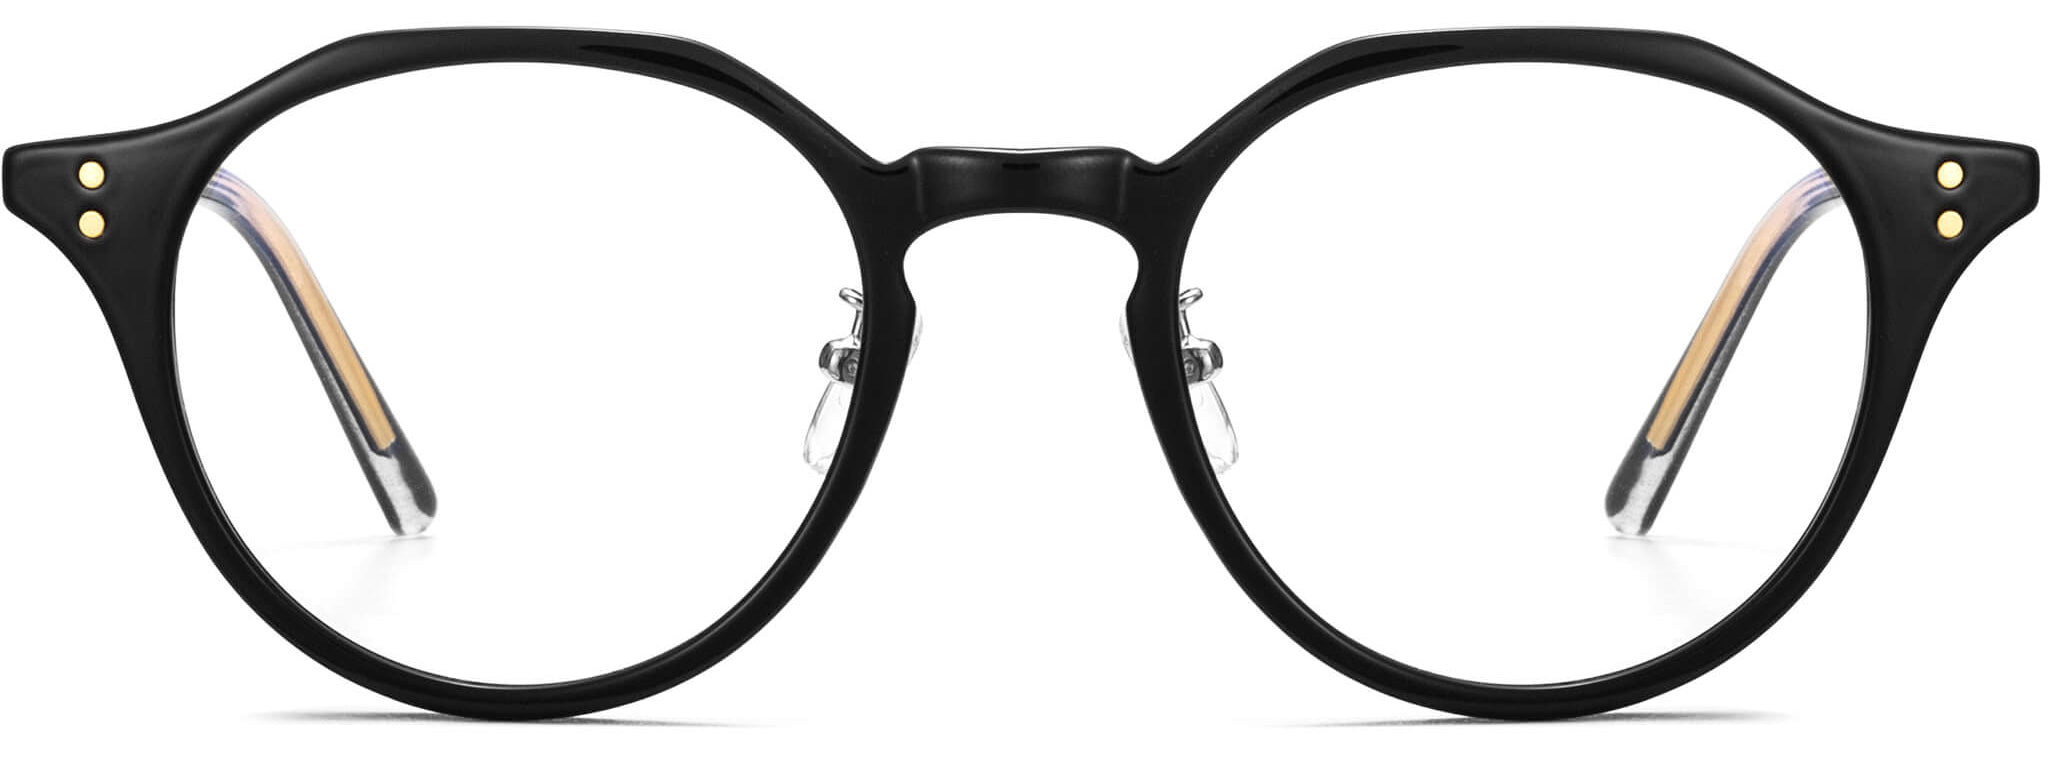 Glynn Black Acetate Eyeglasses from ANRRI